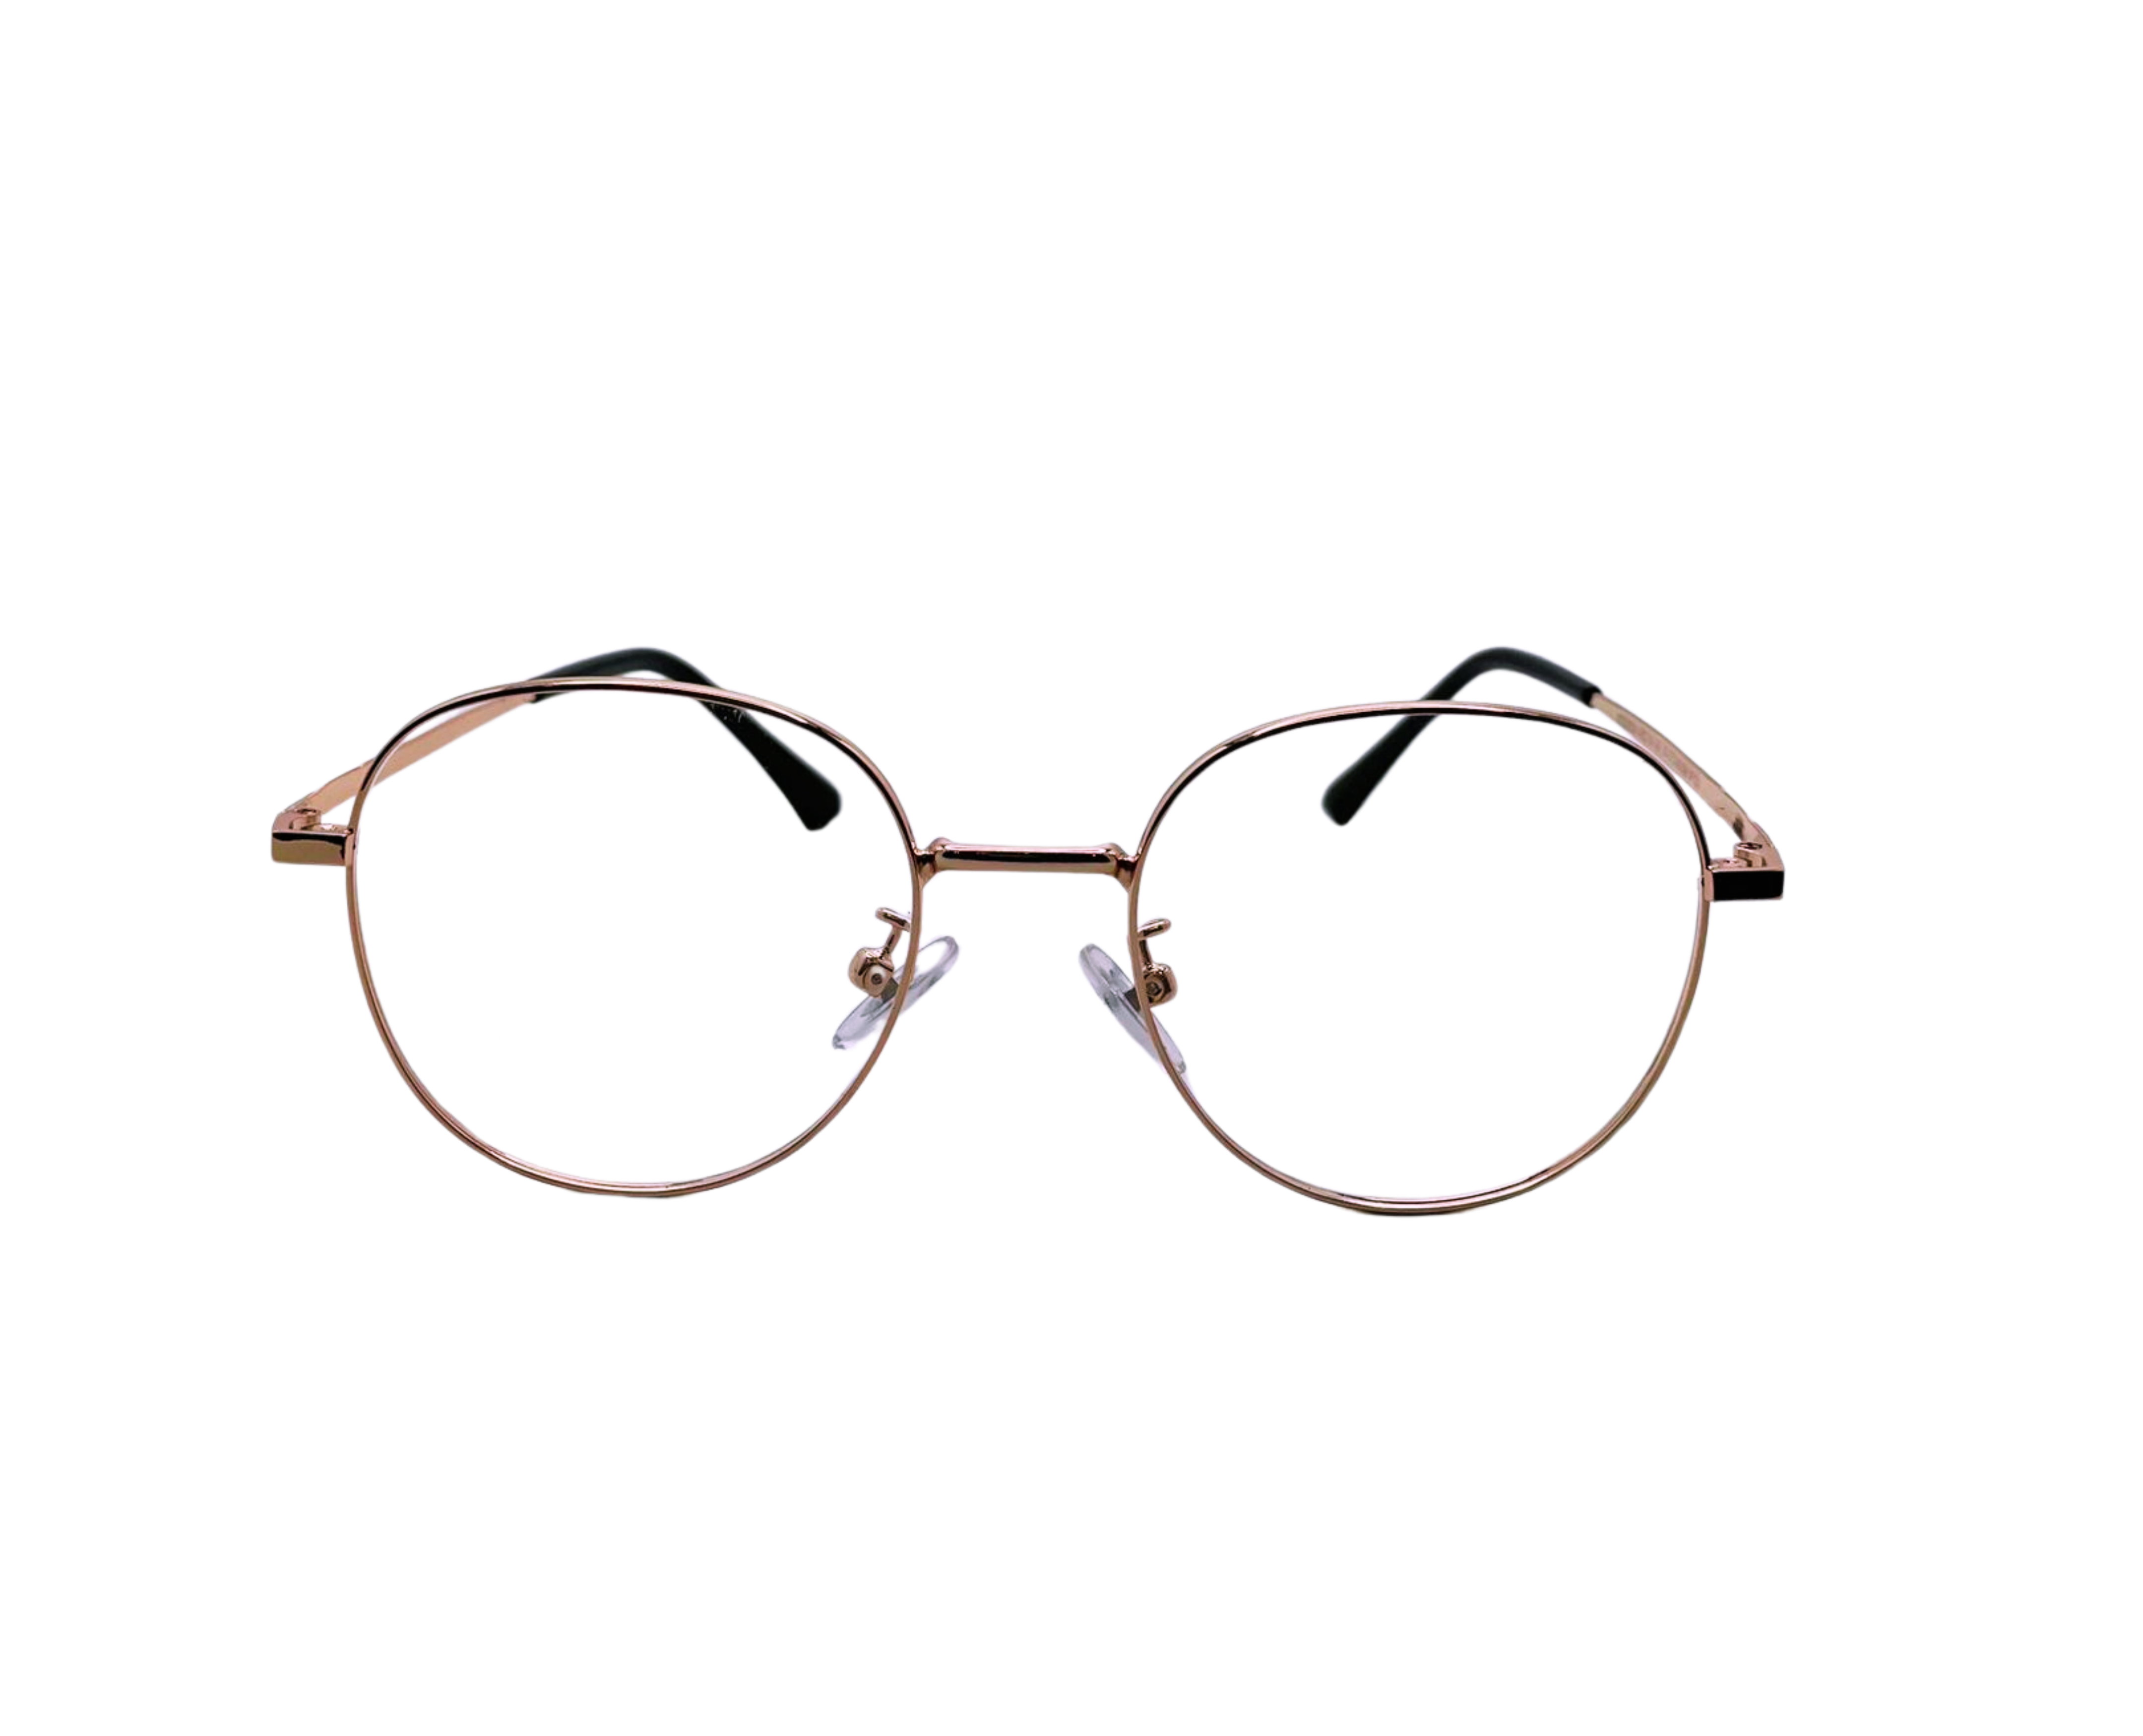 NS Deluxe - 33038 - Rose Gold - Eyeglasses